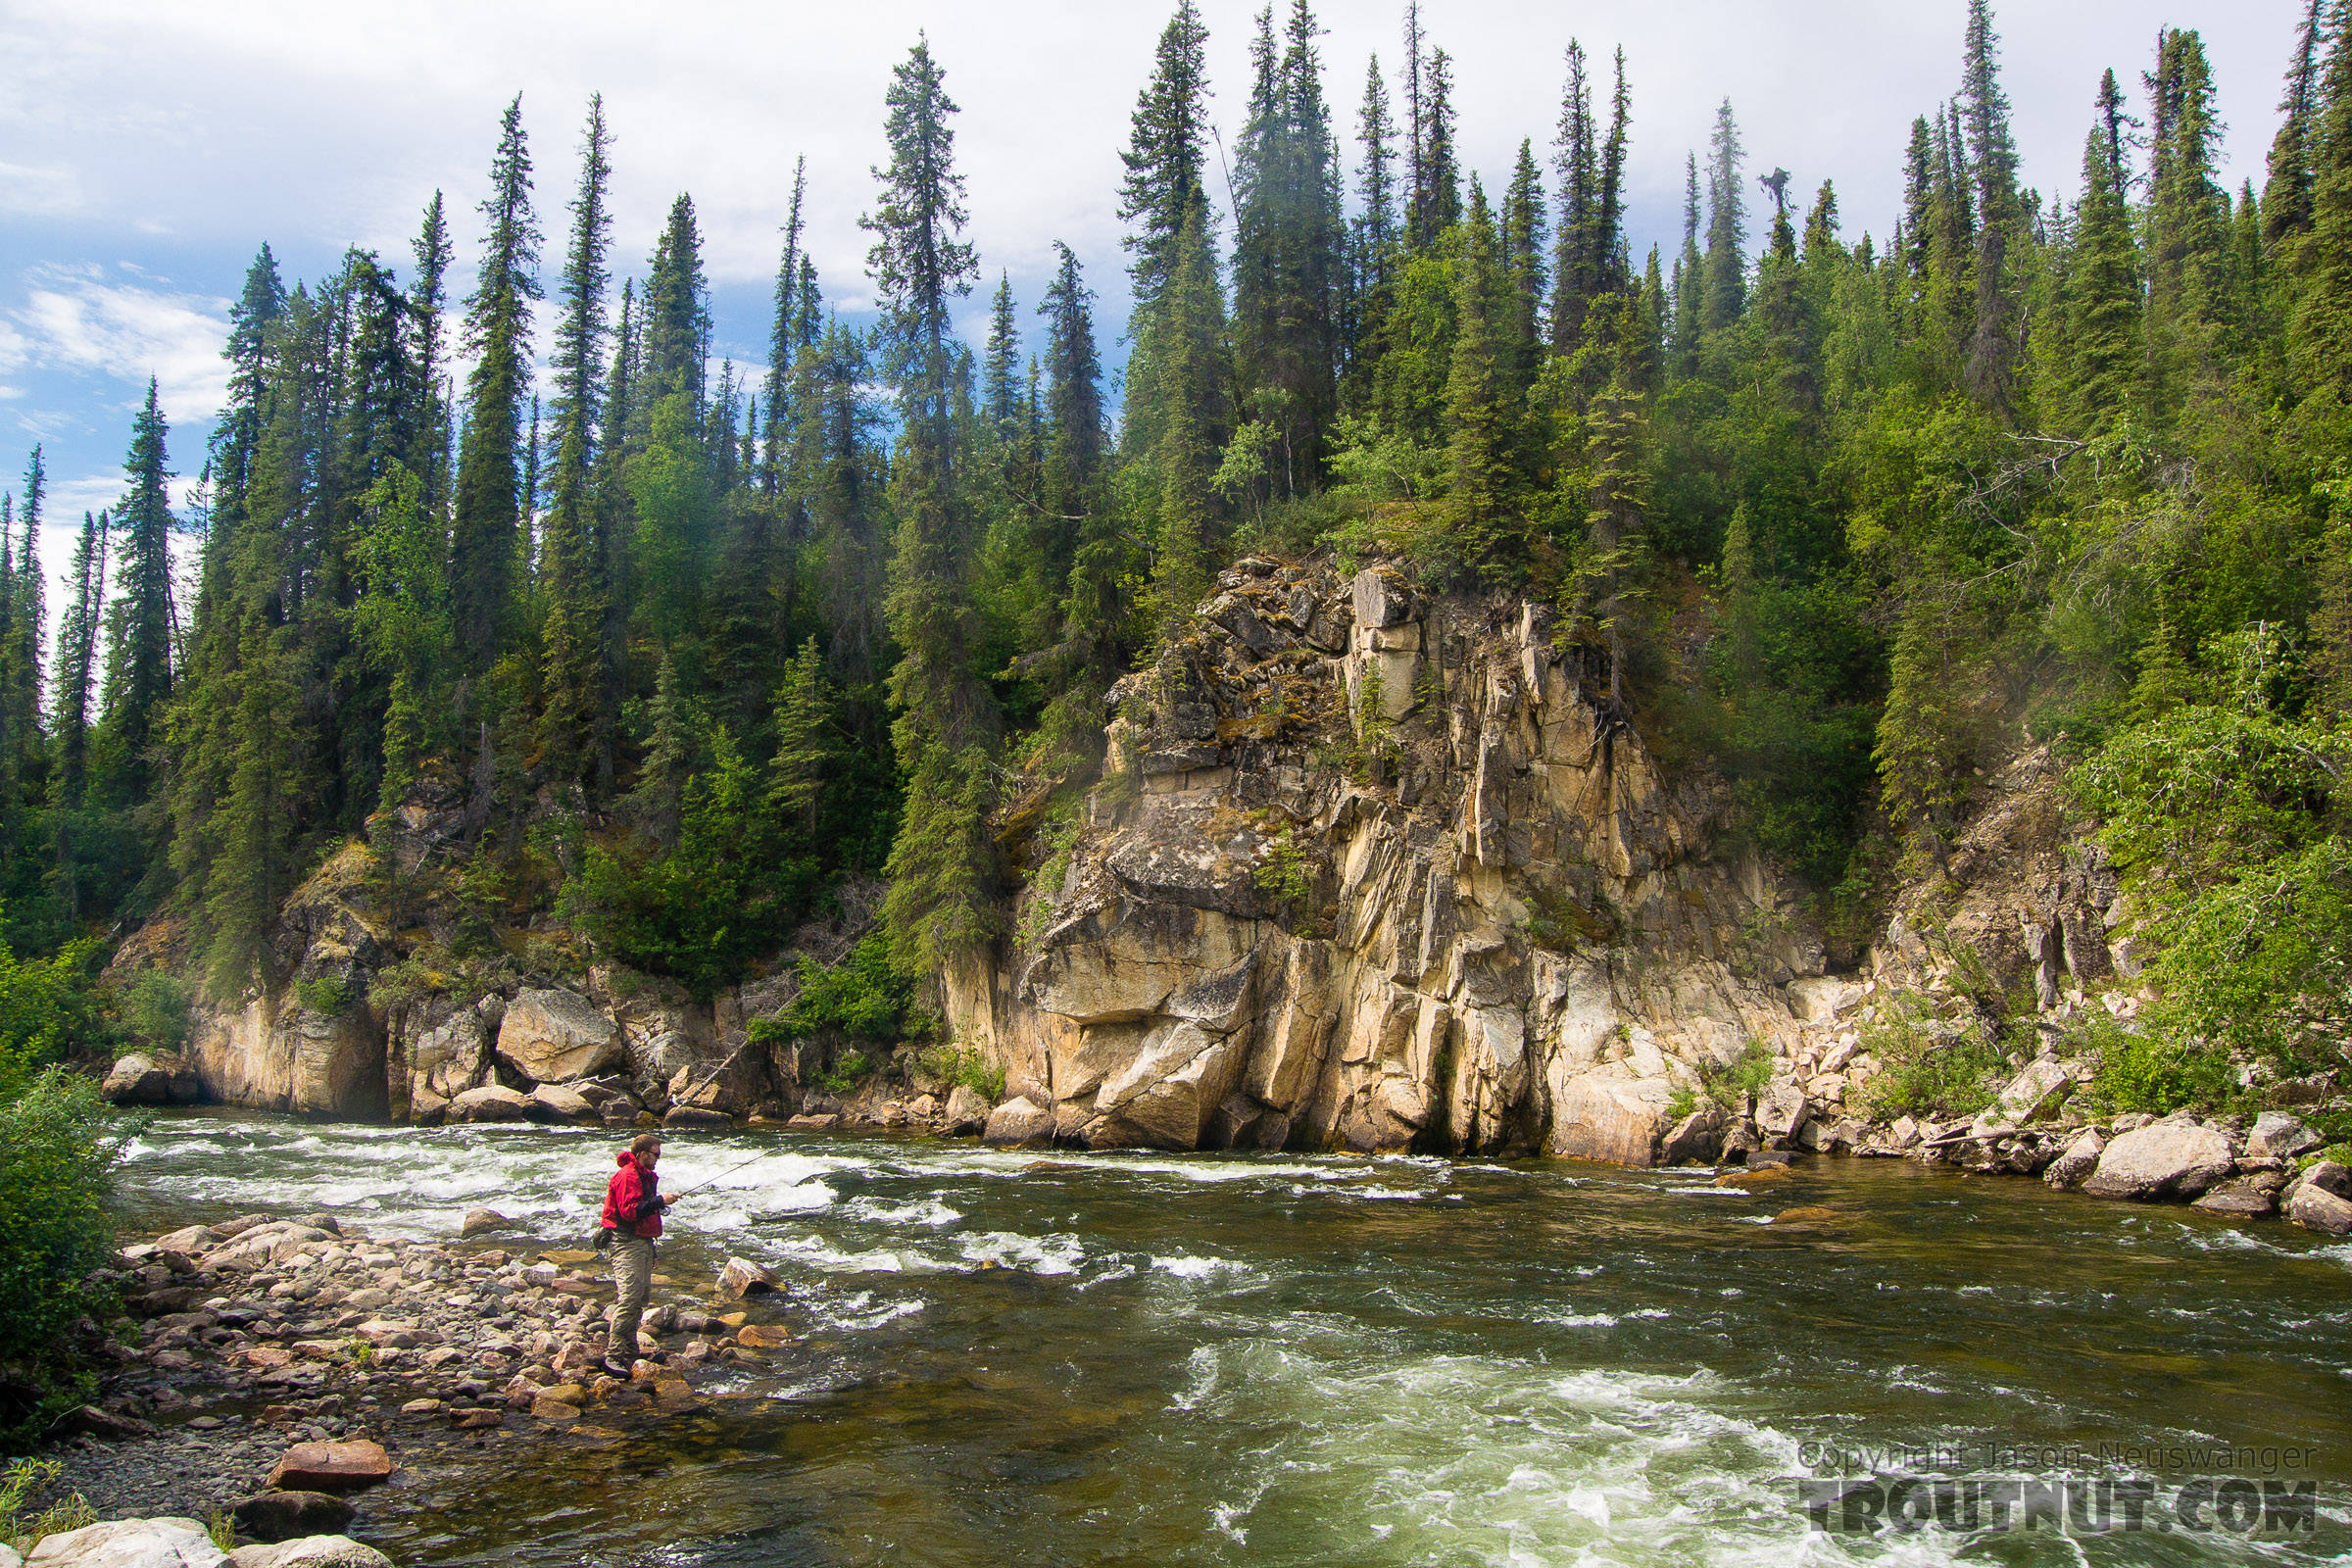 Josh fishing the tail of a big pool in the rapids From the Gulkana River in Alaska.